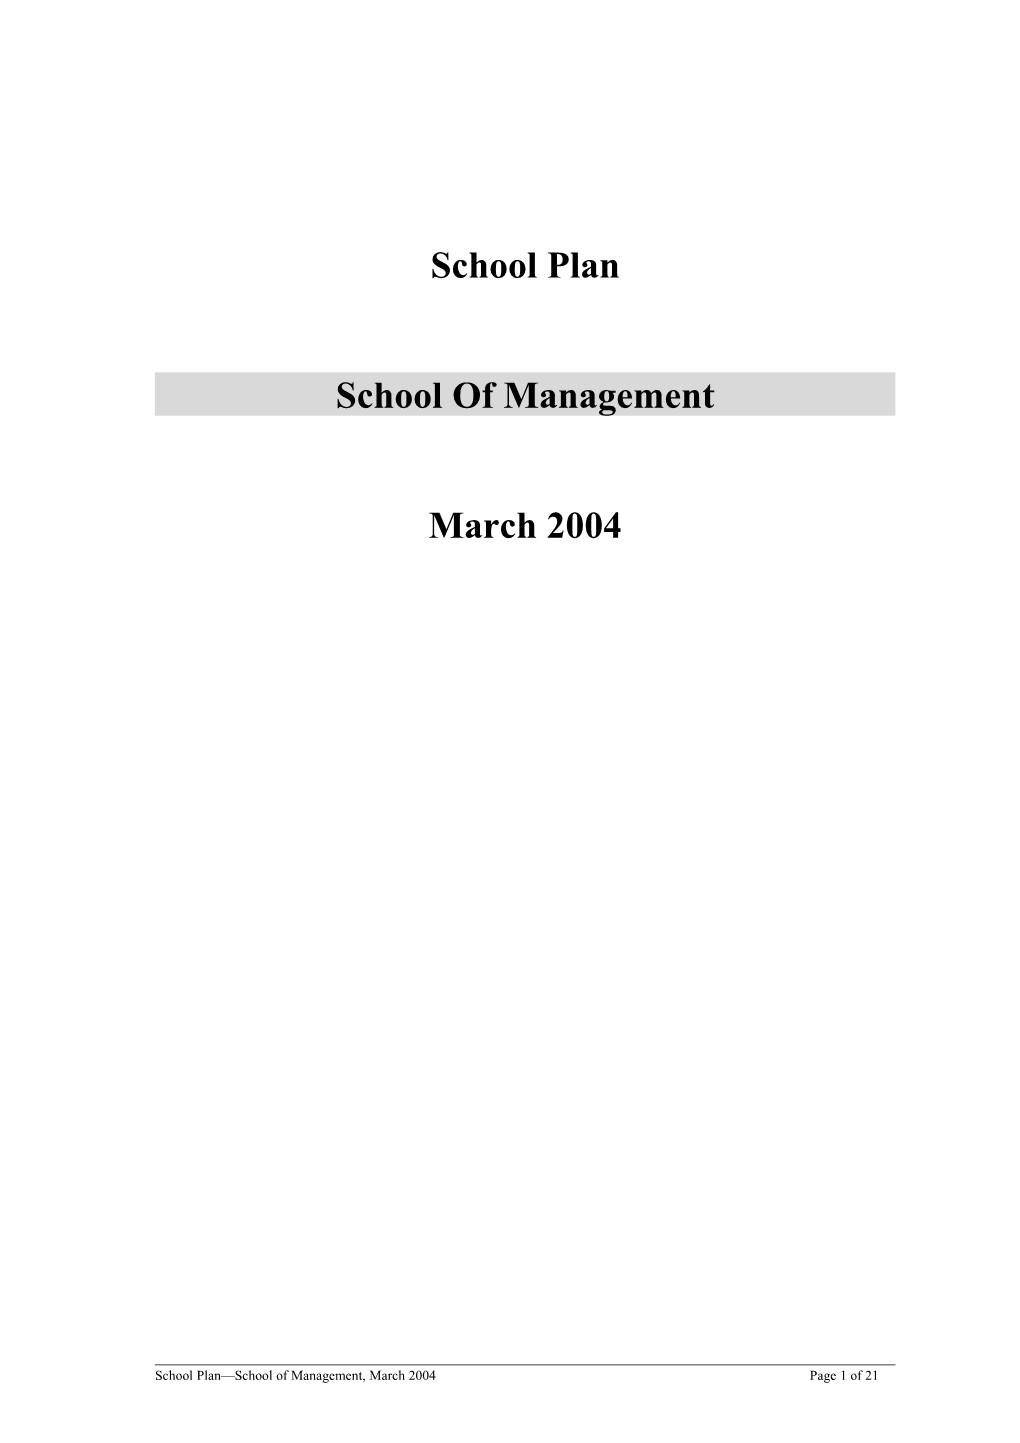 School of Management